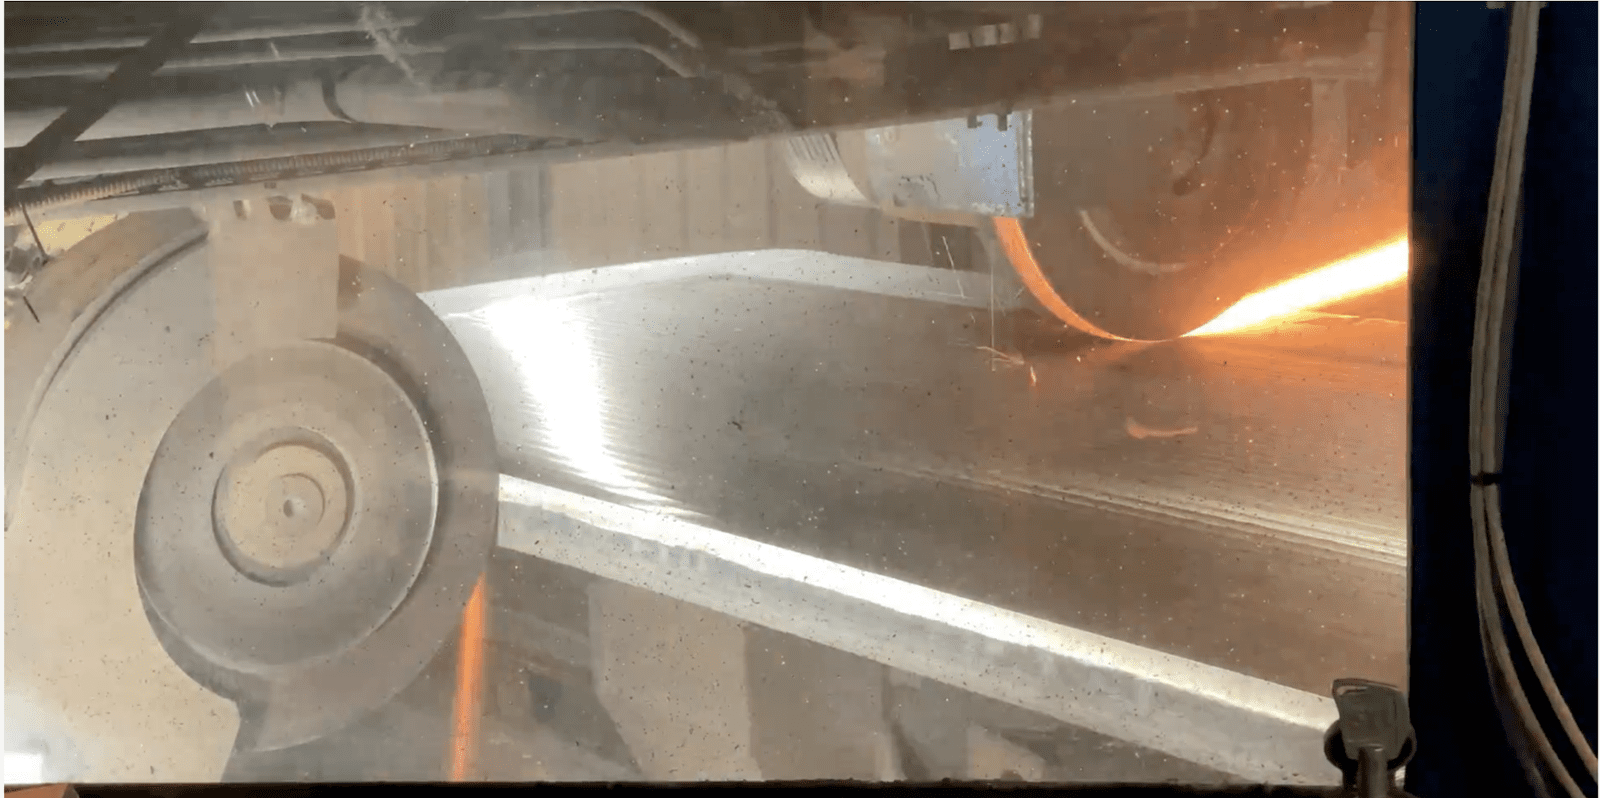 Groupe IMCG wins ARCELORMITTAL Eisenhüttenstadt's tender for the grinding of steel slabs